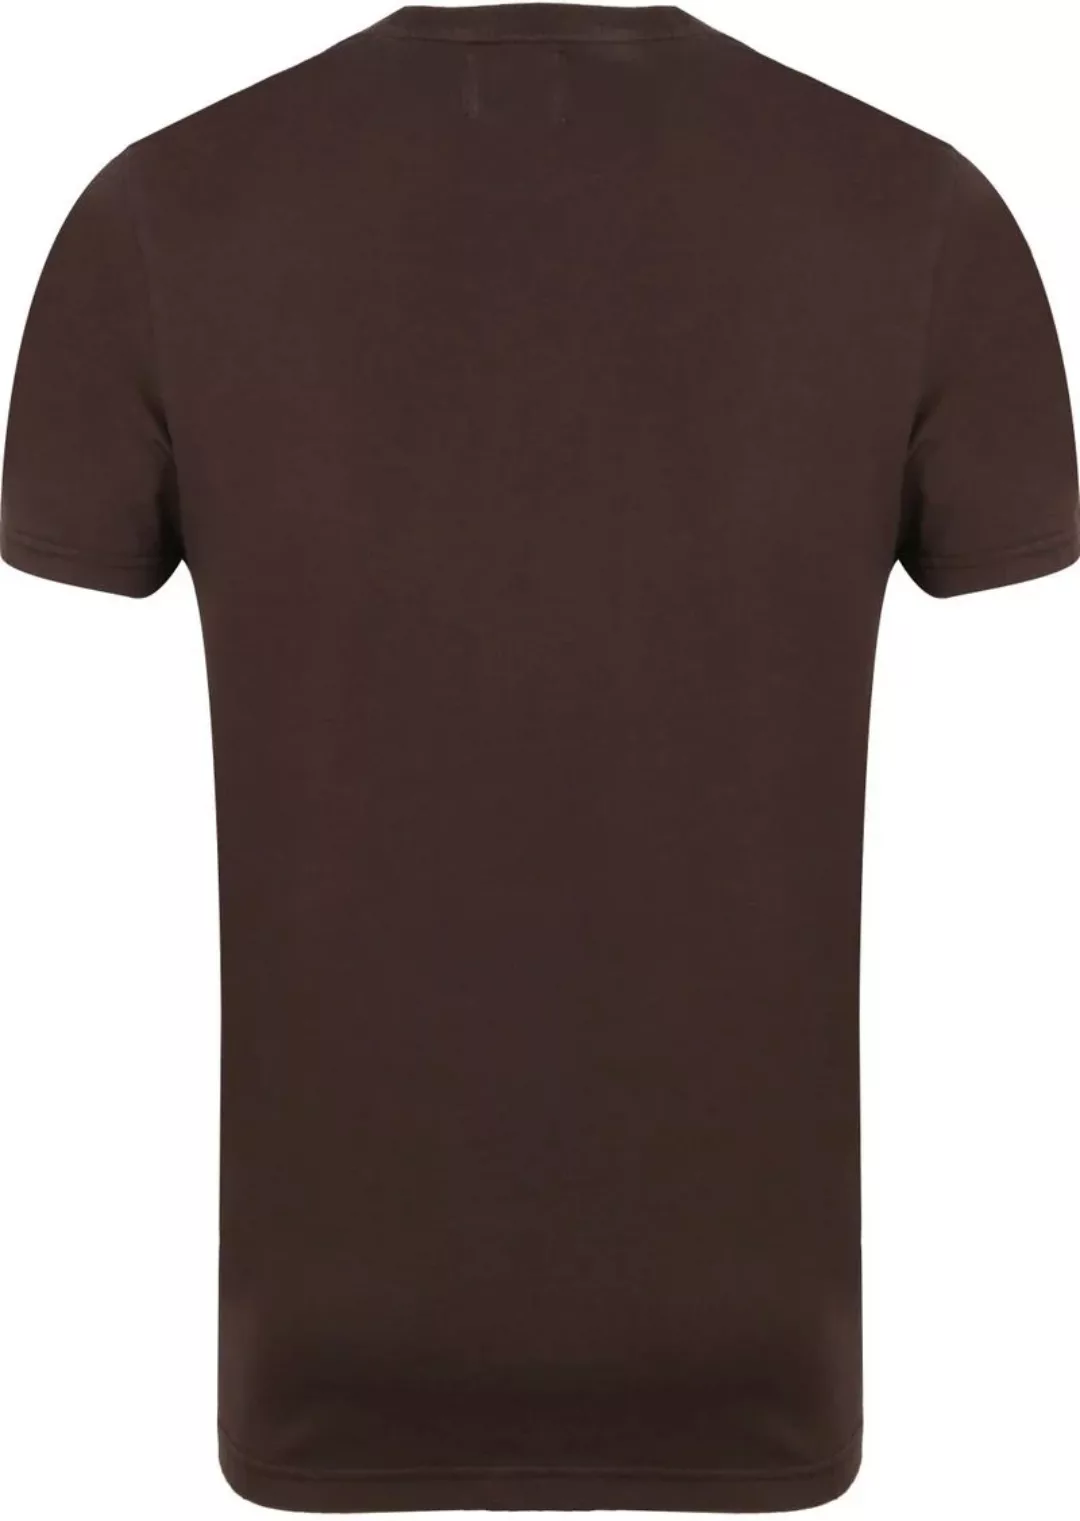 Colorful Standard Organic T-shirt Dunkelbraun - Größe M günstig online kaufen